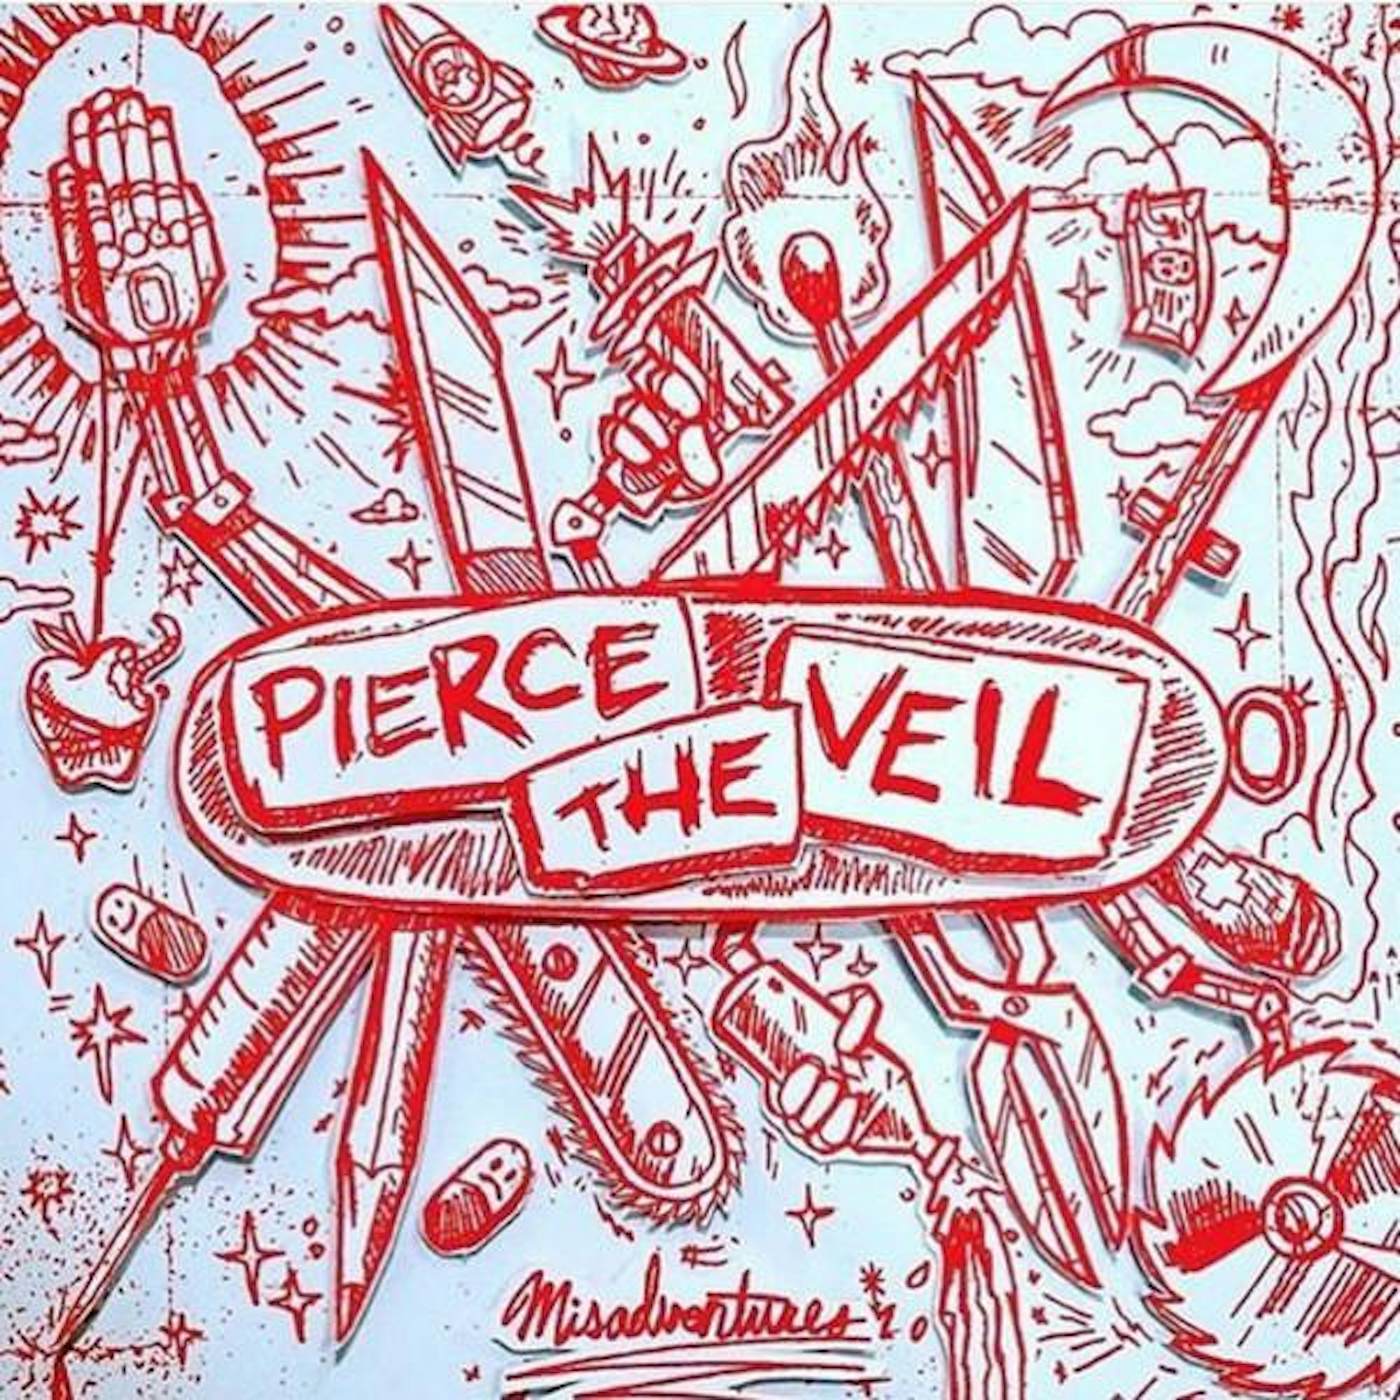 Pierce The Veil Misadventures Vinyl Record